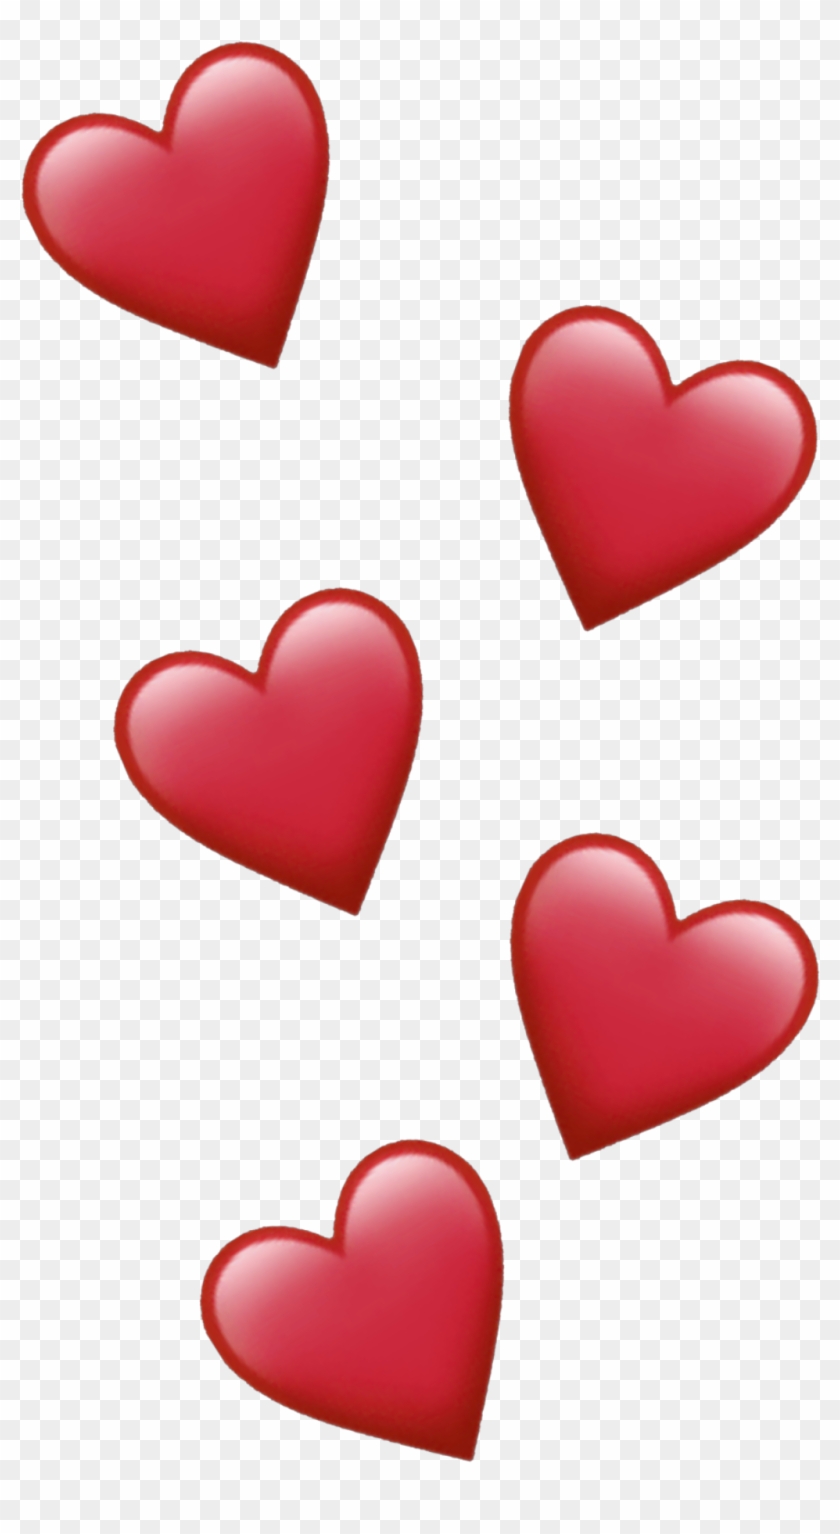 Red Heart Emoji - Heart HD Png Download - 2896x2896 